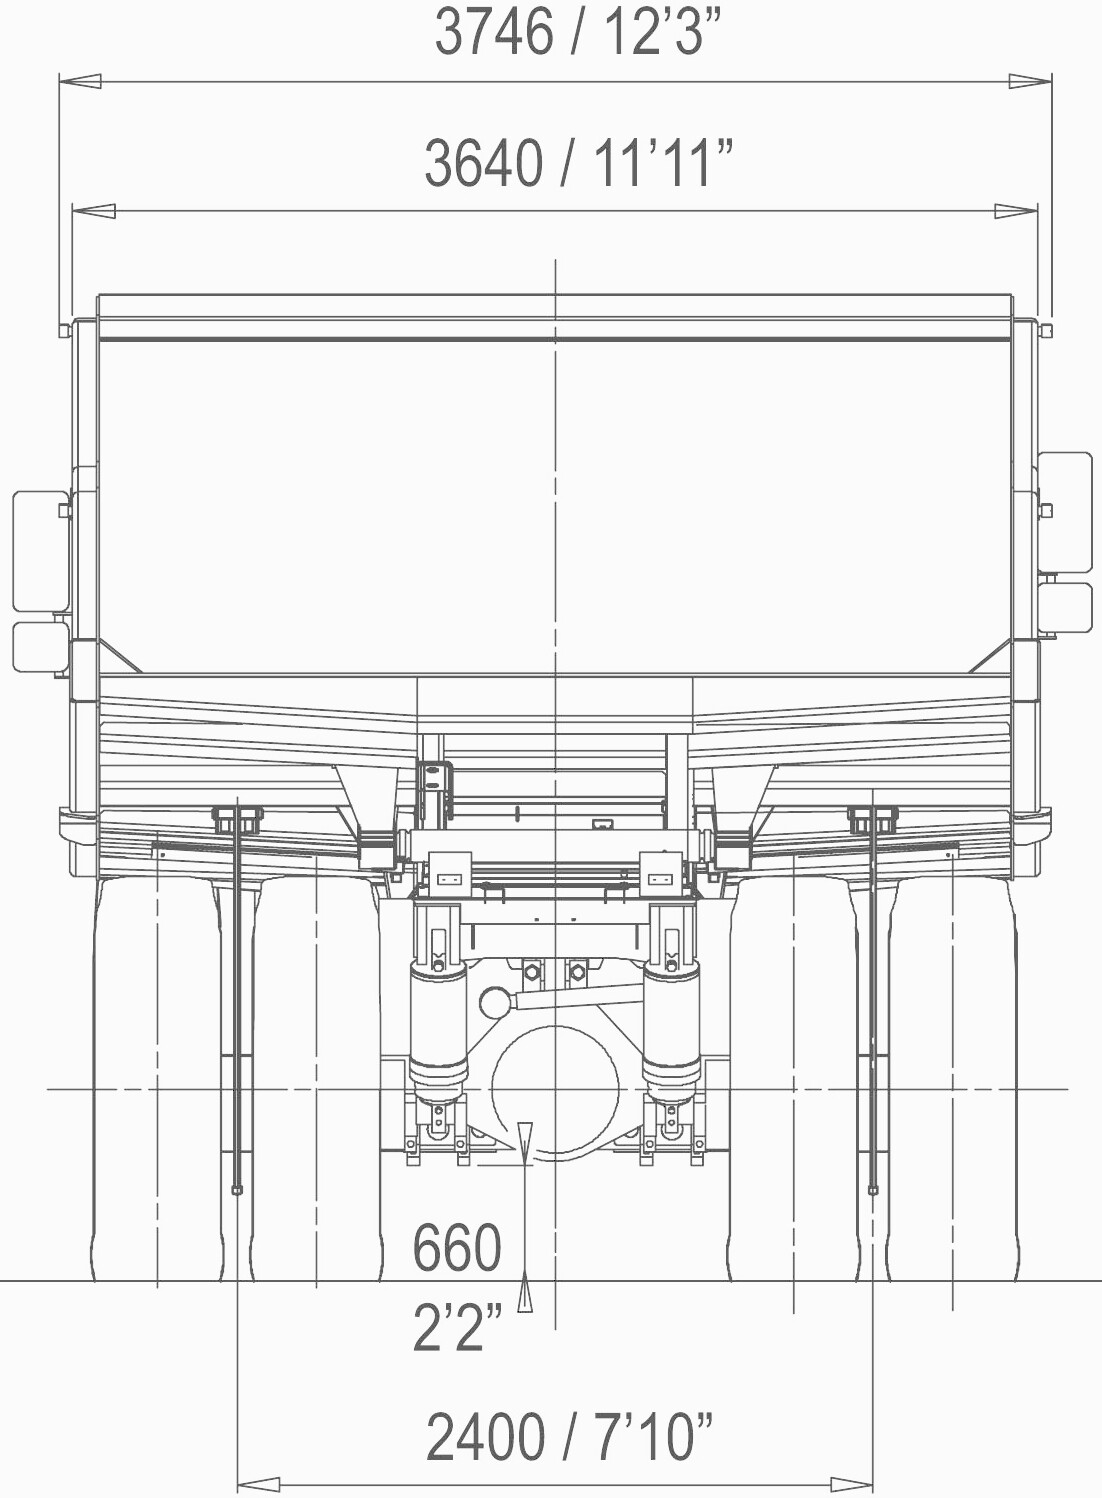 Astra RD 32 C blueprint